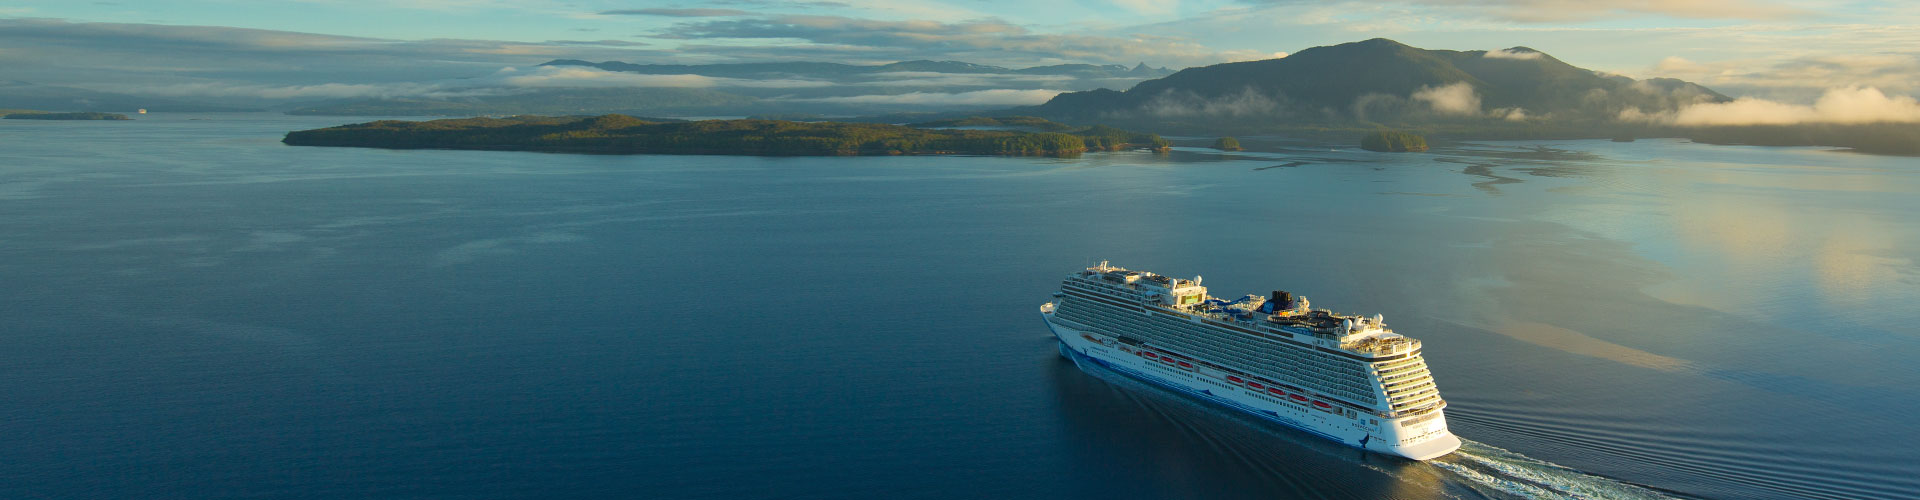 Alaska Bound Scrapbookers - Norwegian Cruise Line - Cruise Critic Community